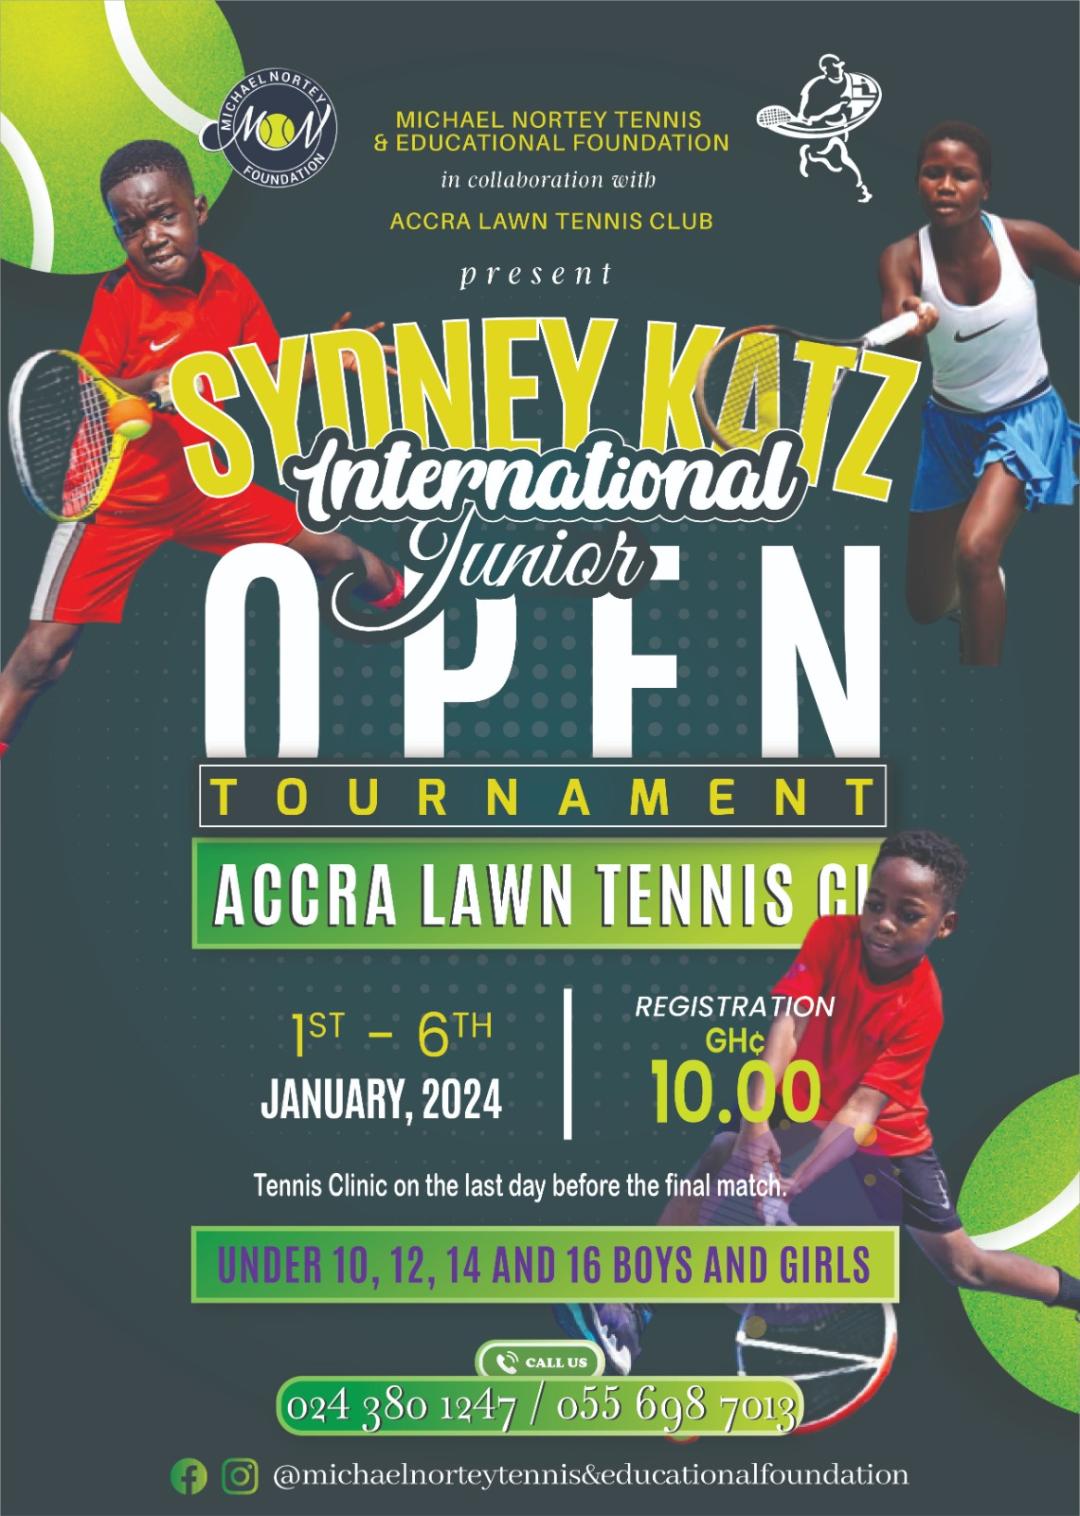 Sydney Katz Junior Tennis Championship Slated for 1st Jan. 2024